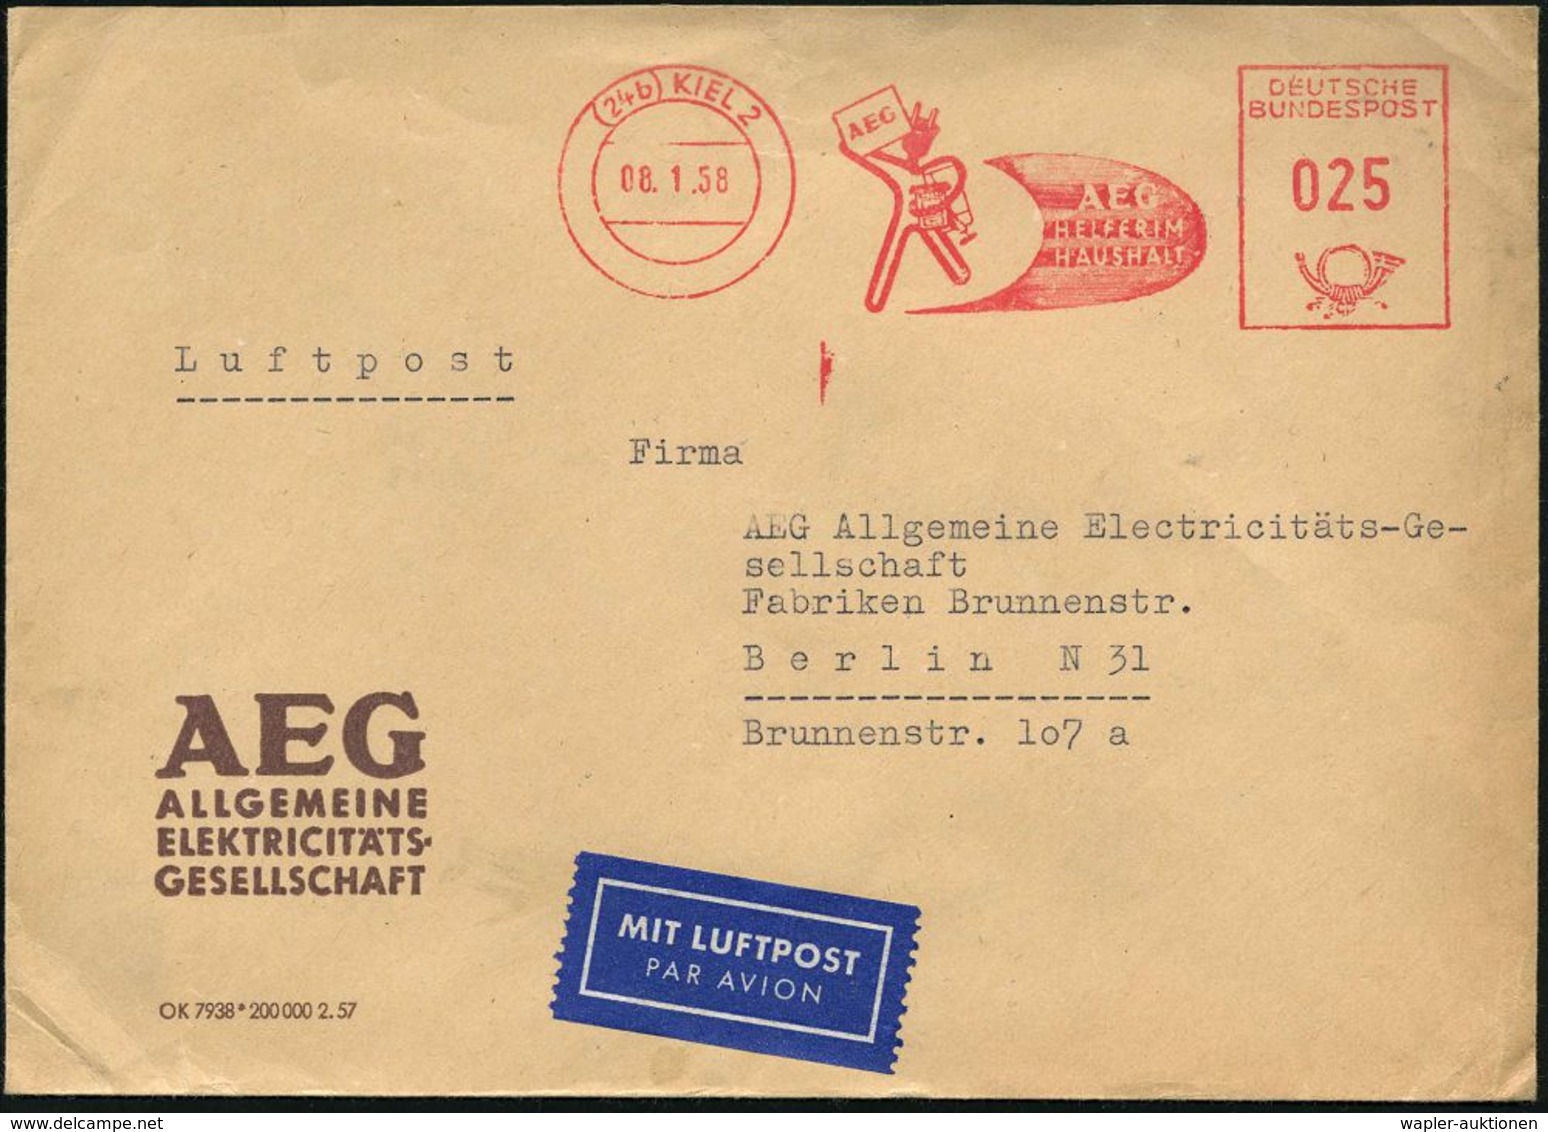 (24b) KIEL 2/ AEG/ HELFER IM/ HAUSHALT 1958 (8.1.) AFS 025 Pf. "Elektro-Teufel" Aus Elektrokabel (tansportiert Elektrohe - Elektriciteit